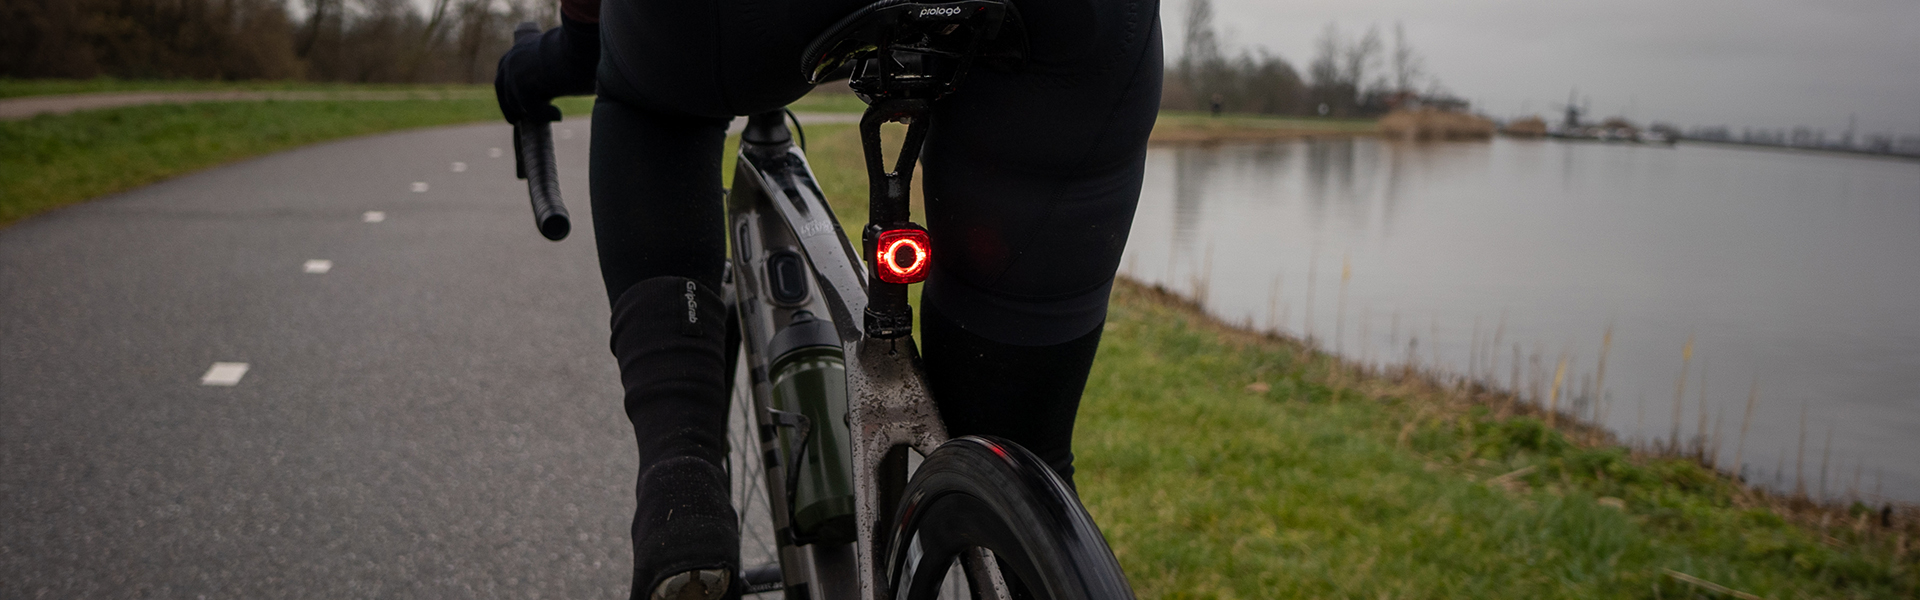 Sate-lite 300 lumen USB rechargeable bike light eletric bike front light CREE LED waterproof